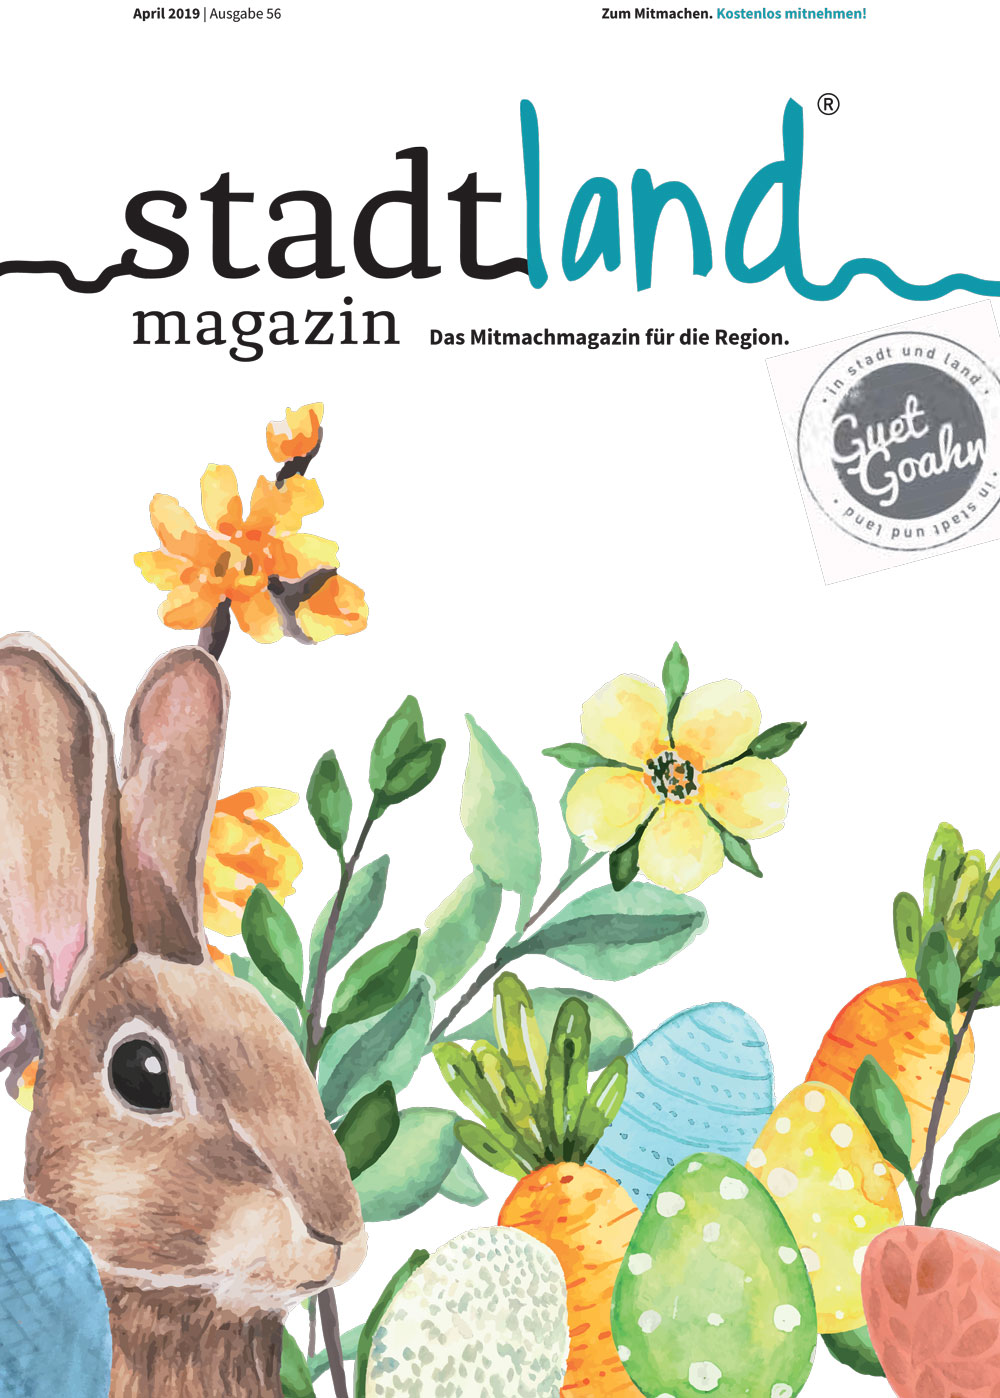 stadtland magazin April 2019